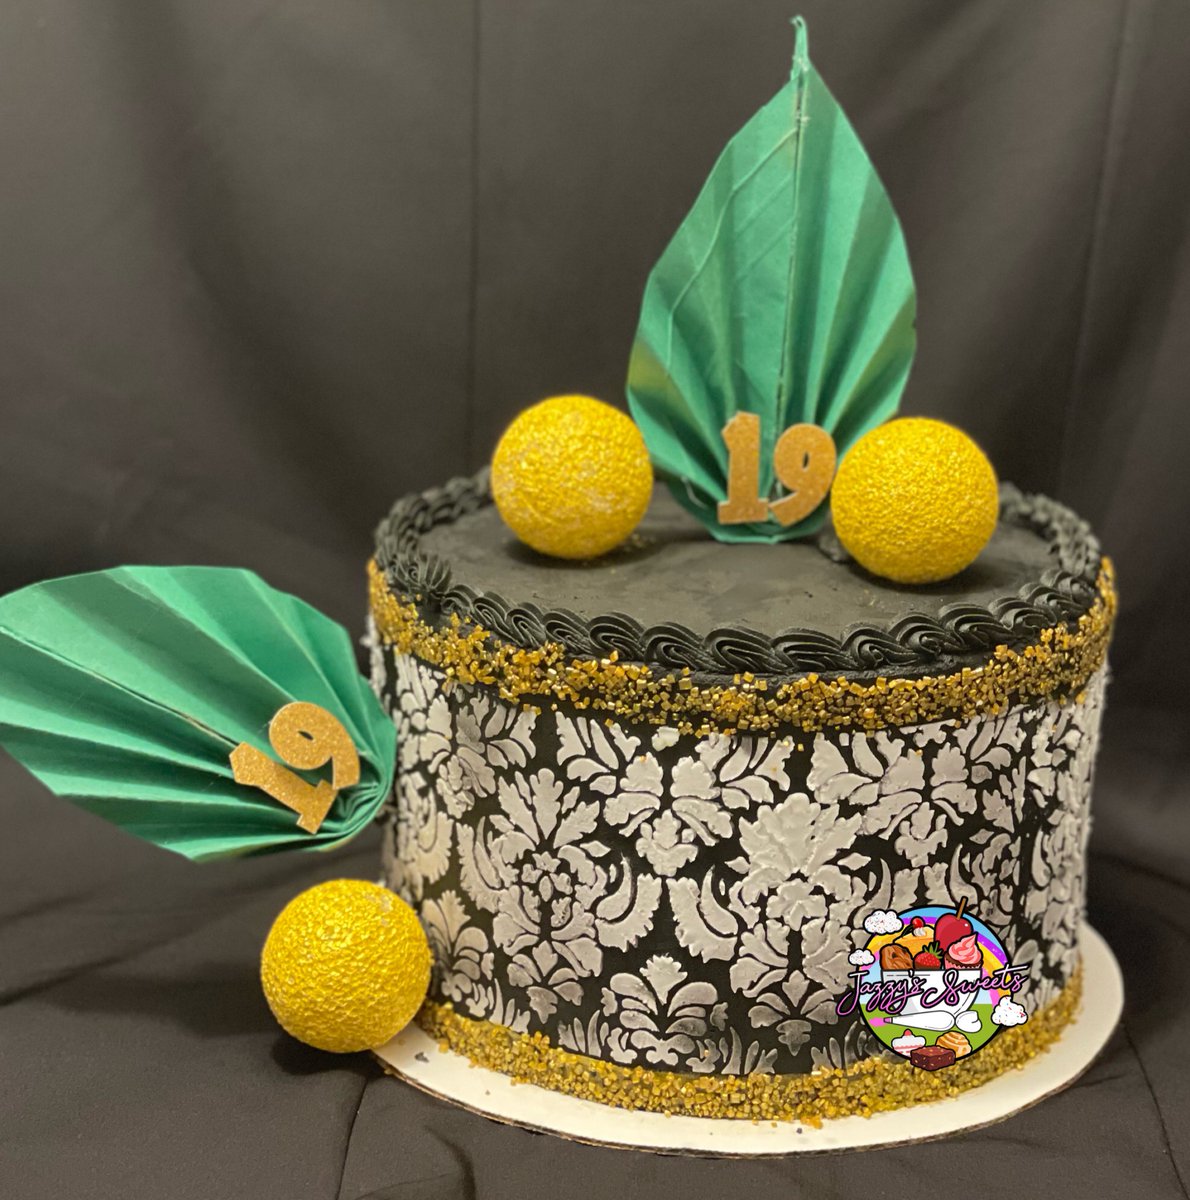 19th Anniversary Cake 🎉🎉

Visit jazzyssweets.com

#EverythingIsBetterHomemade #EatTastyTreatsWithJazzysSweets #bakegoods #baking #bakery #bakingwithlove #desserts #CustomCake #anniversarycake #Raleigh #raleighnc #raleighcakes #cake #blackownedbakery #blackownedbusiness